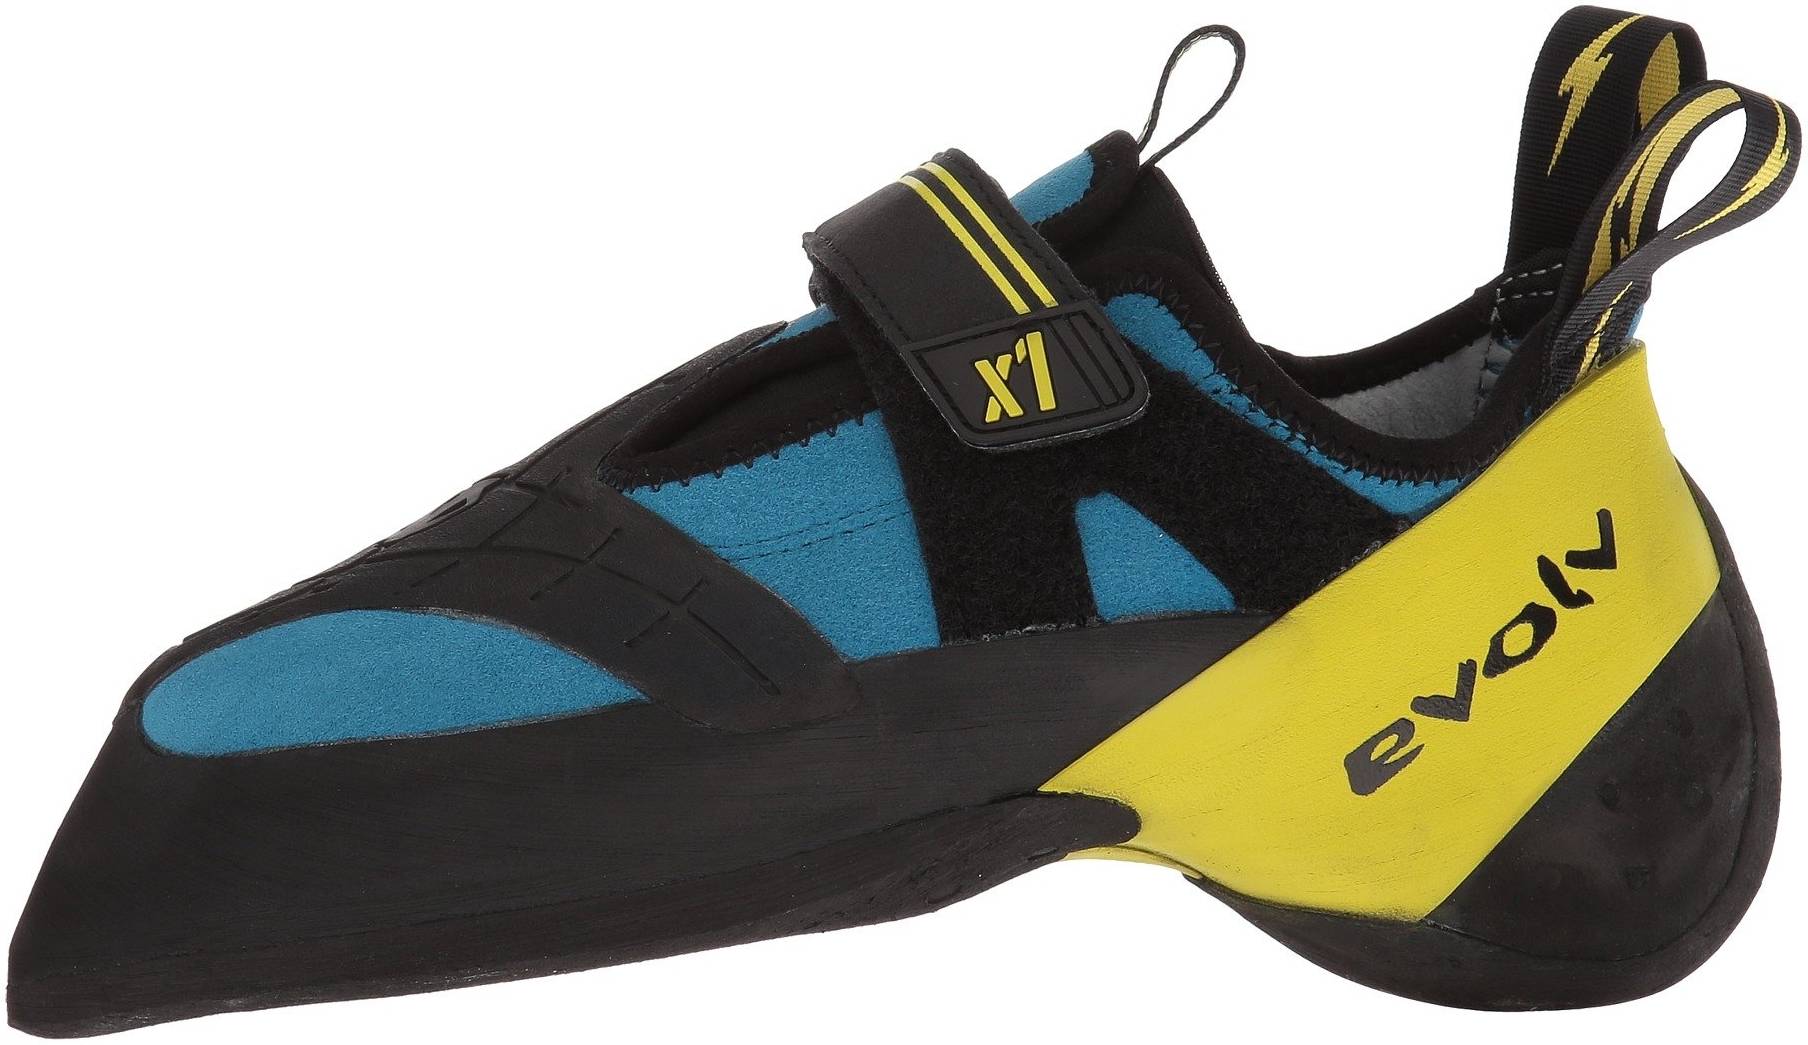 Evolv Mens X1 Climbing Shoes Black Blue Sports 